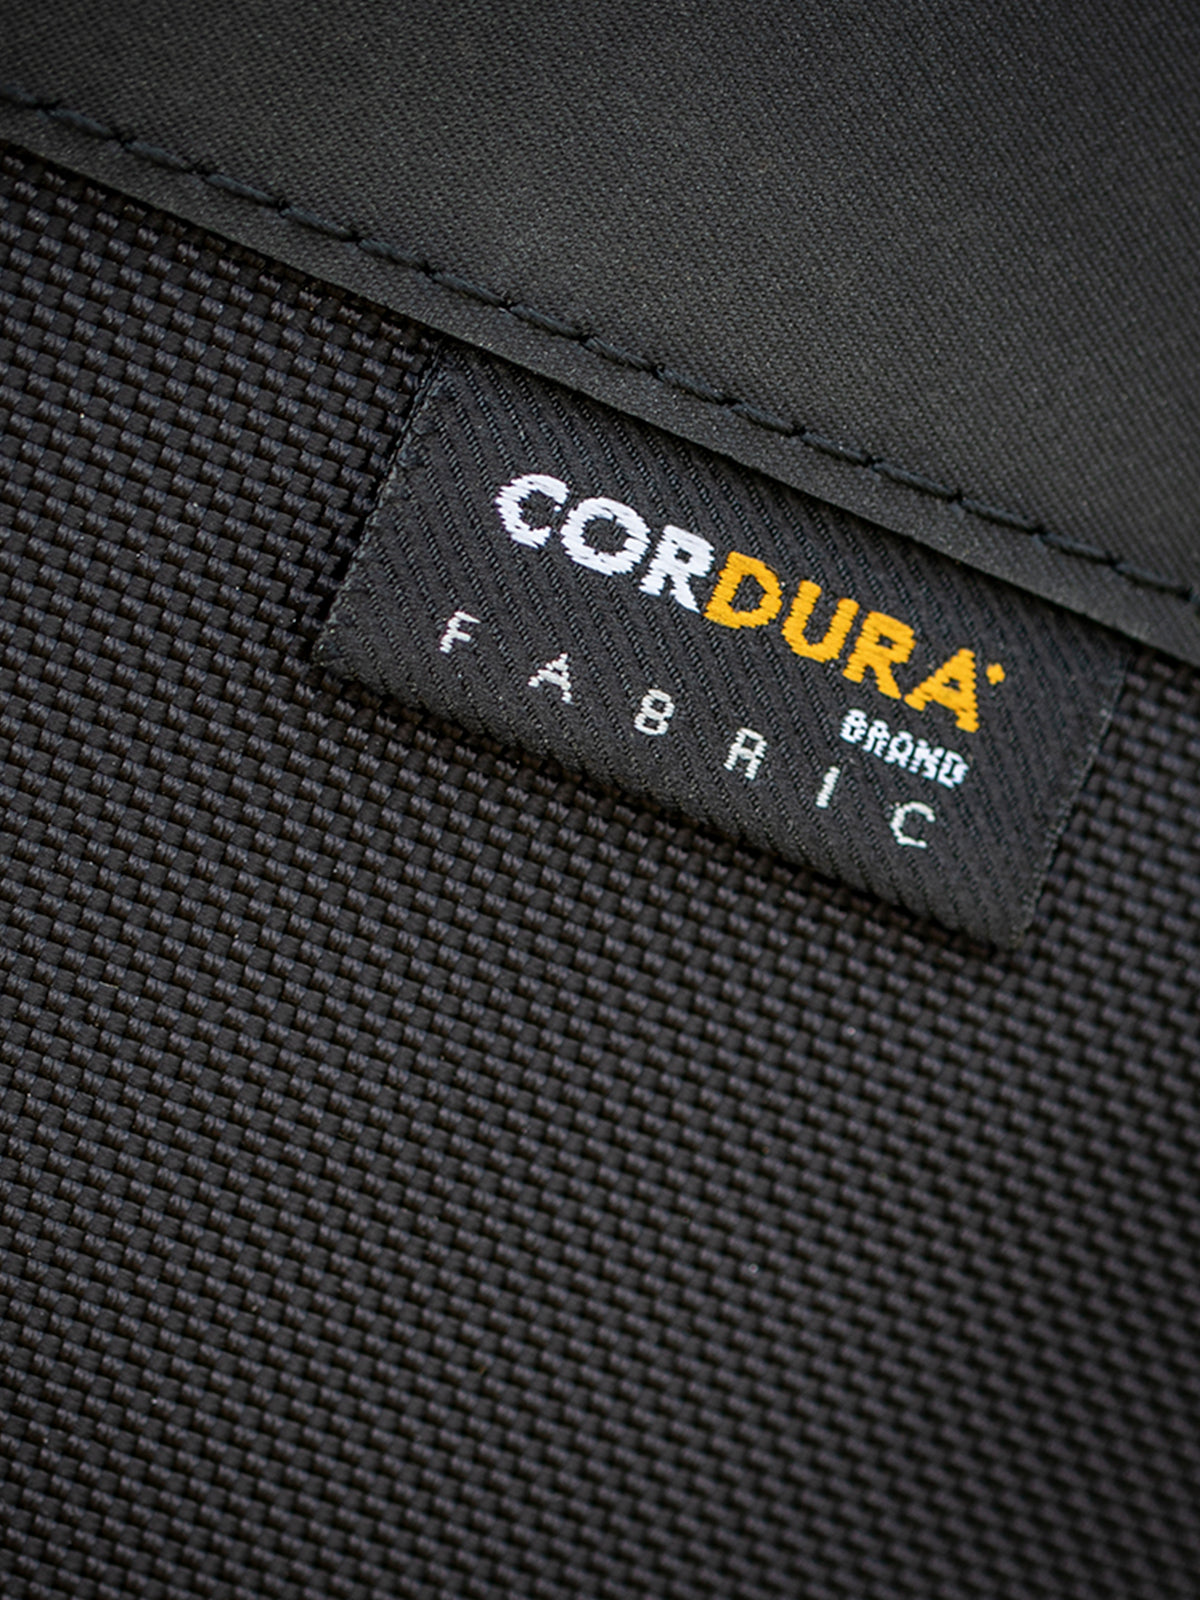 Kriega US20 Drypack cordura label